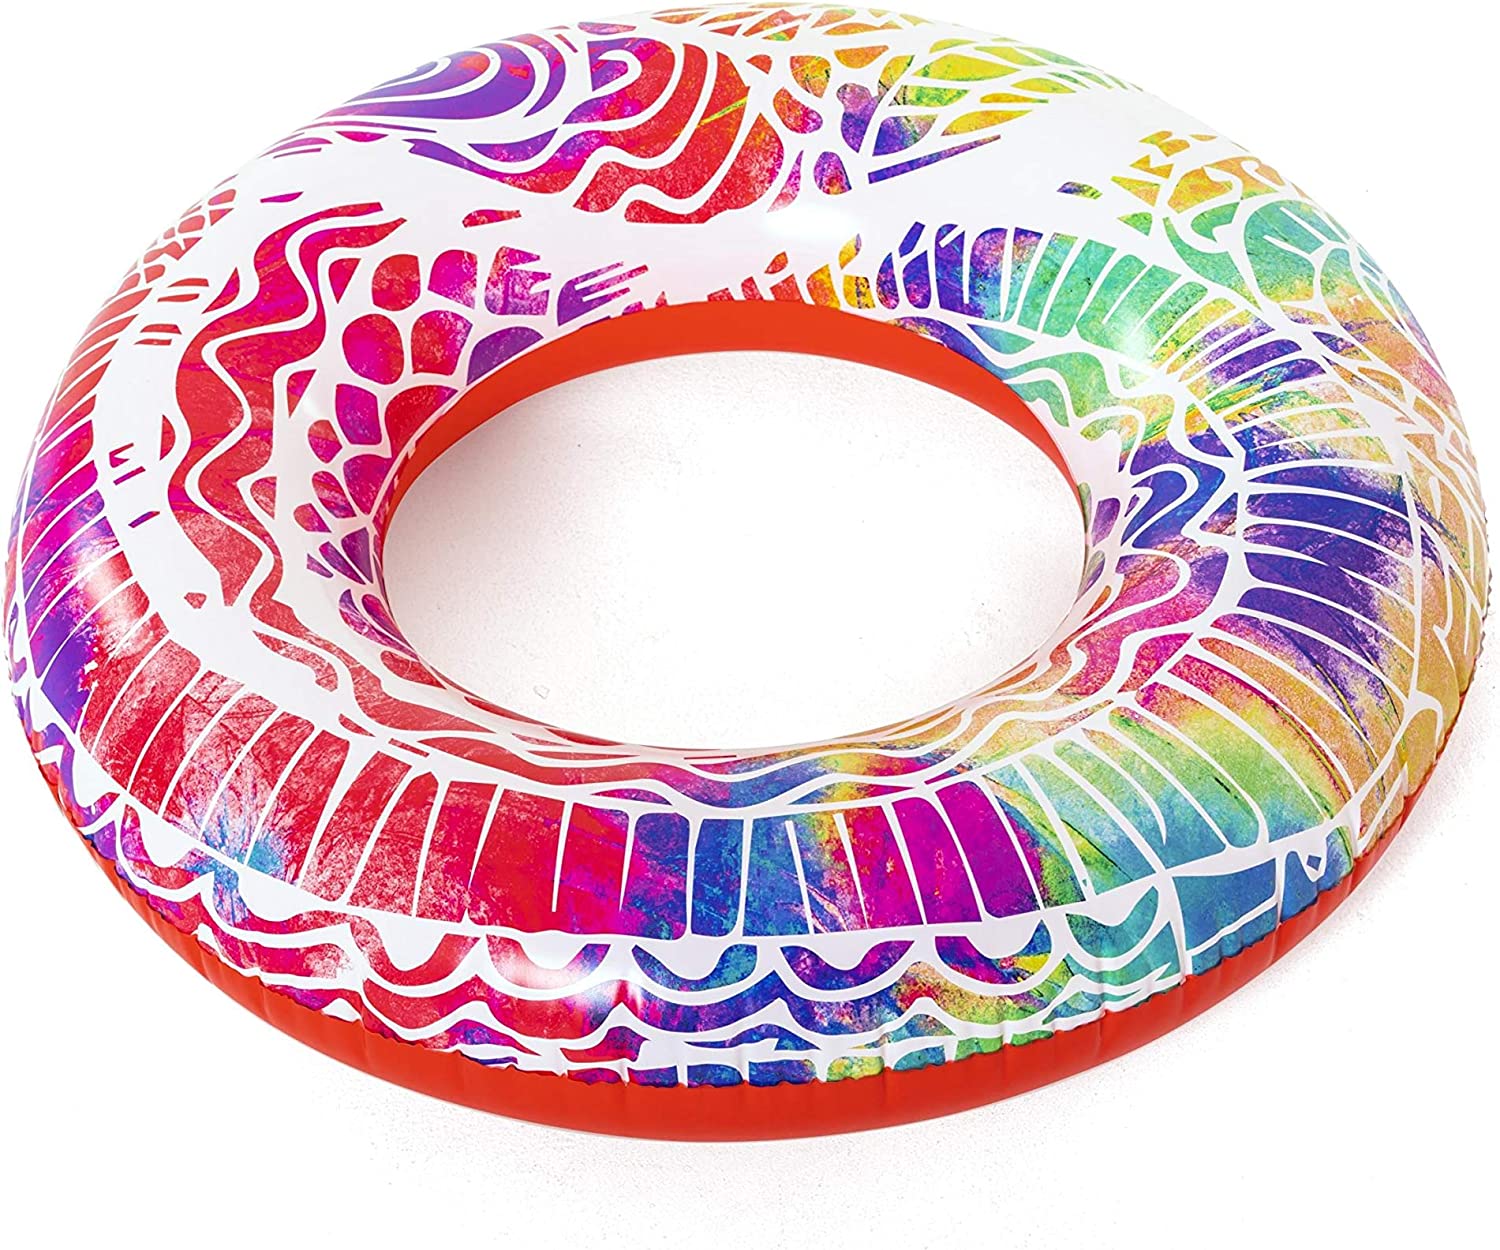 BESTWAY Inflatable Swim Ring Tube